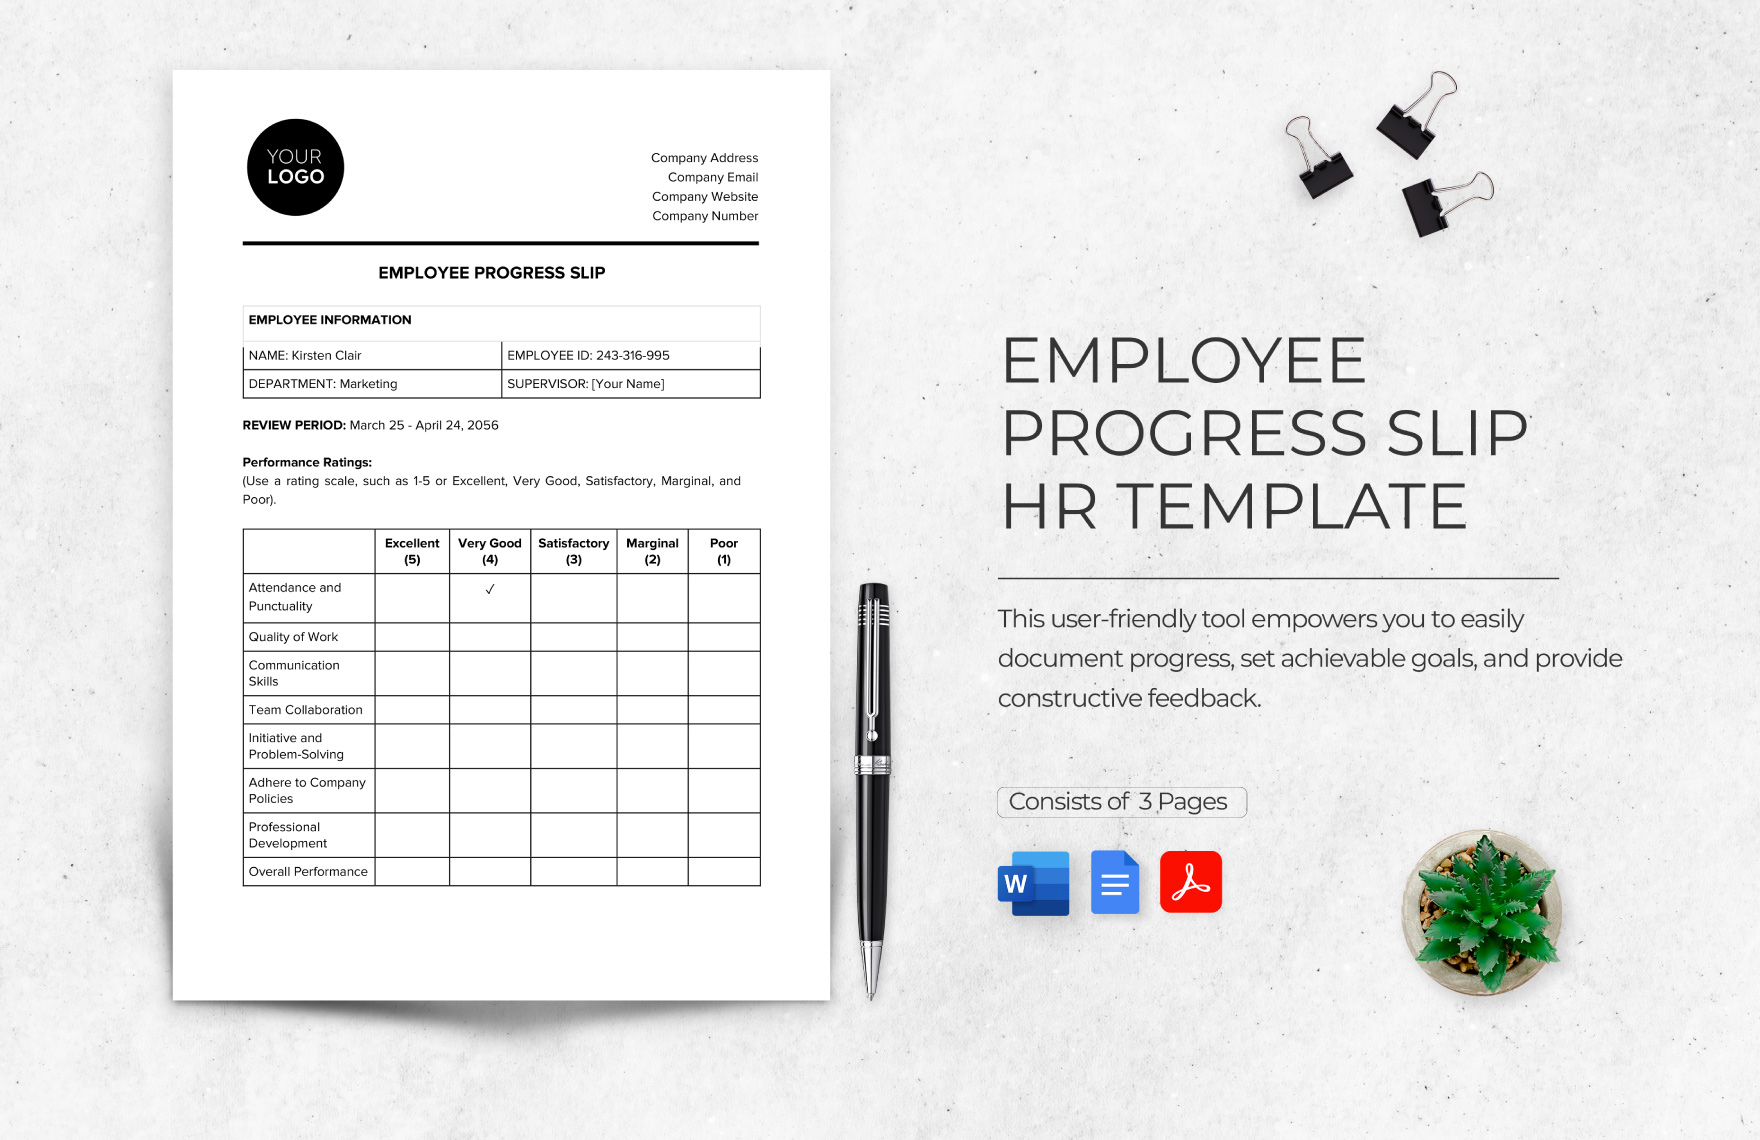 Employee Progress Slip HR Template in Word, Google Docs, PDF